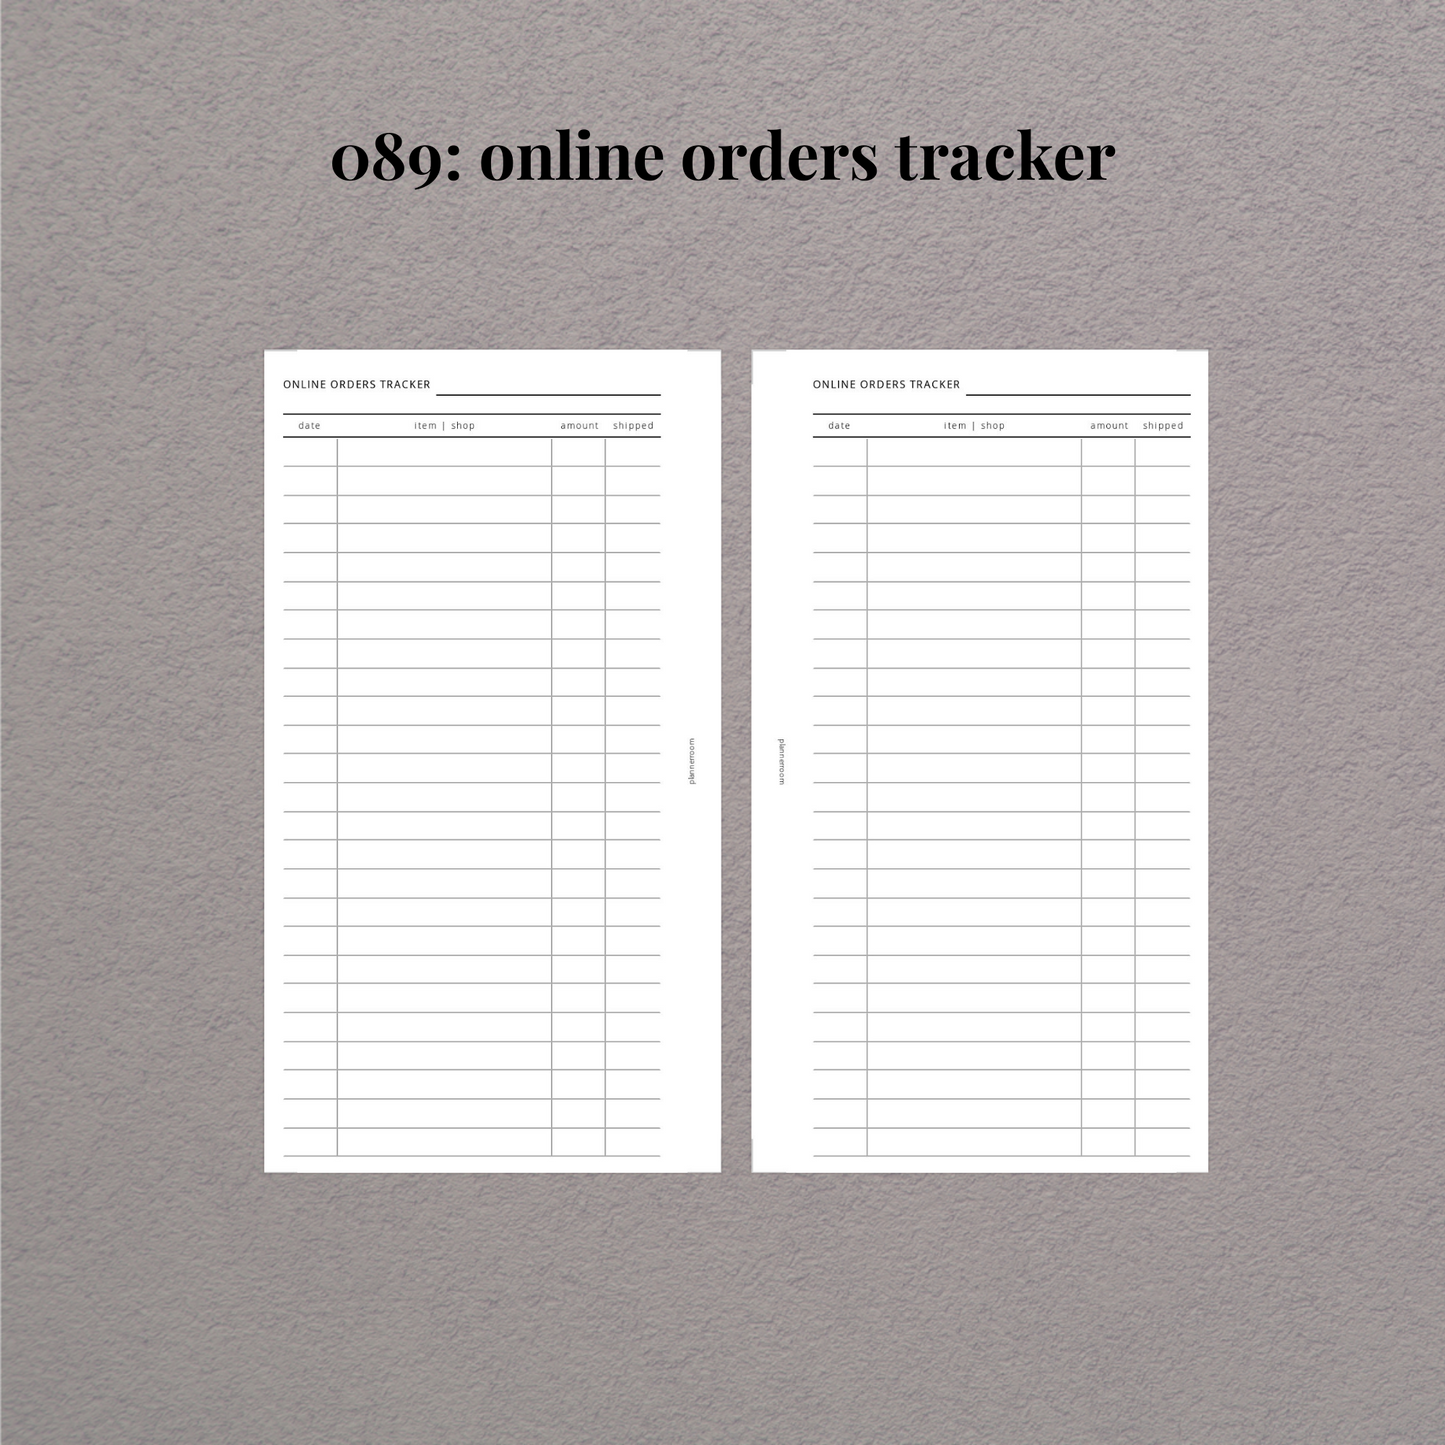 Online orders tracker | Printable inserts | 089